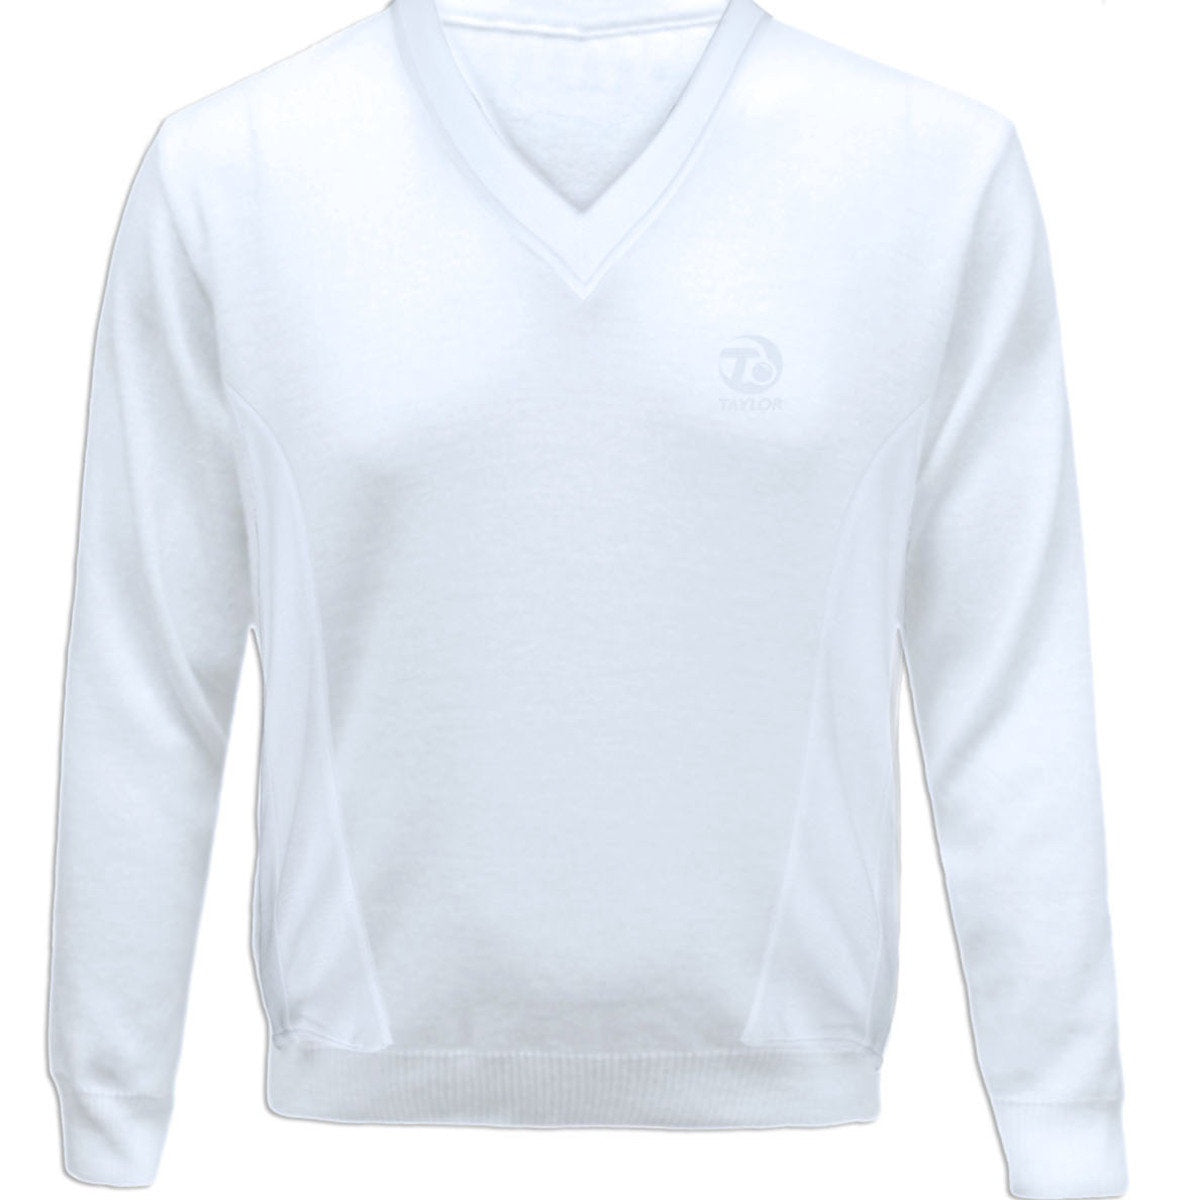 Taylor White Unisex Bowls Sweater